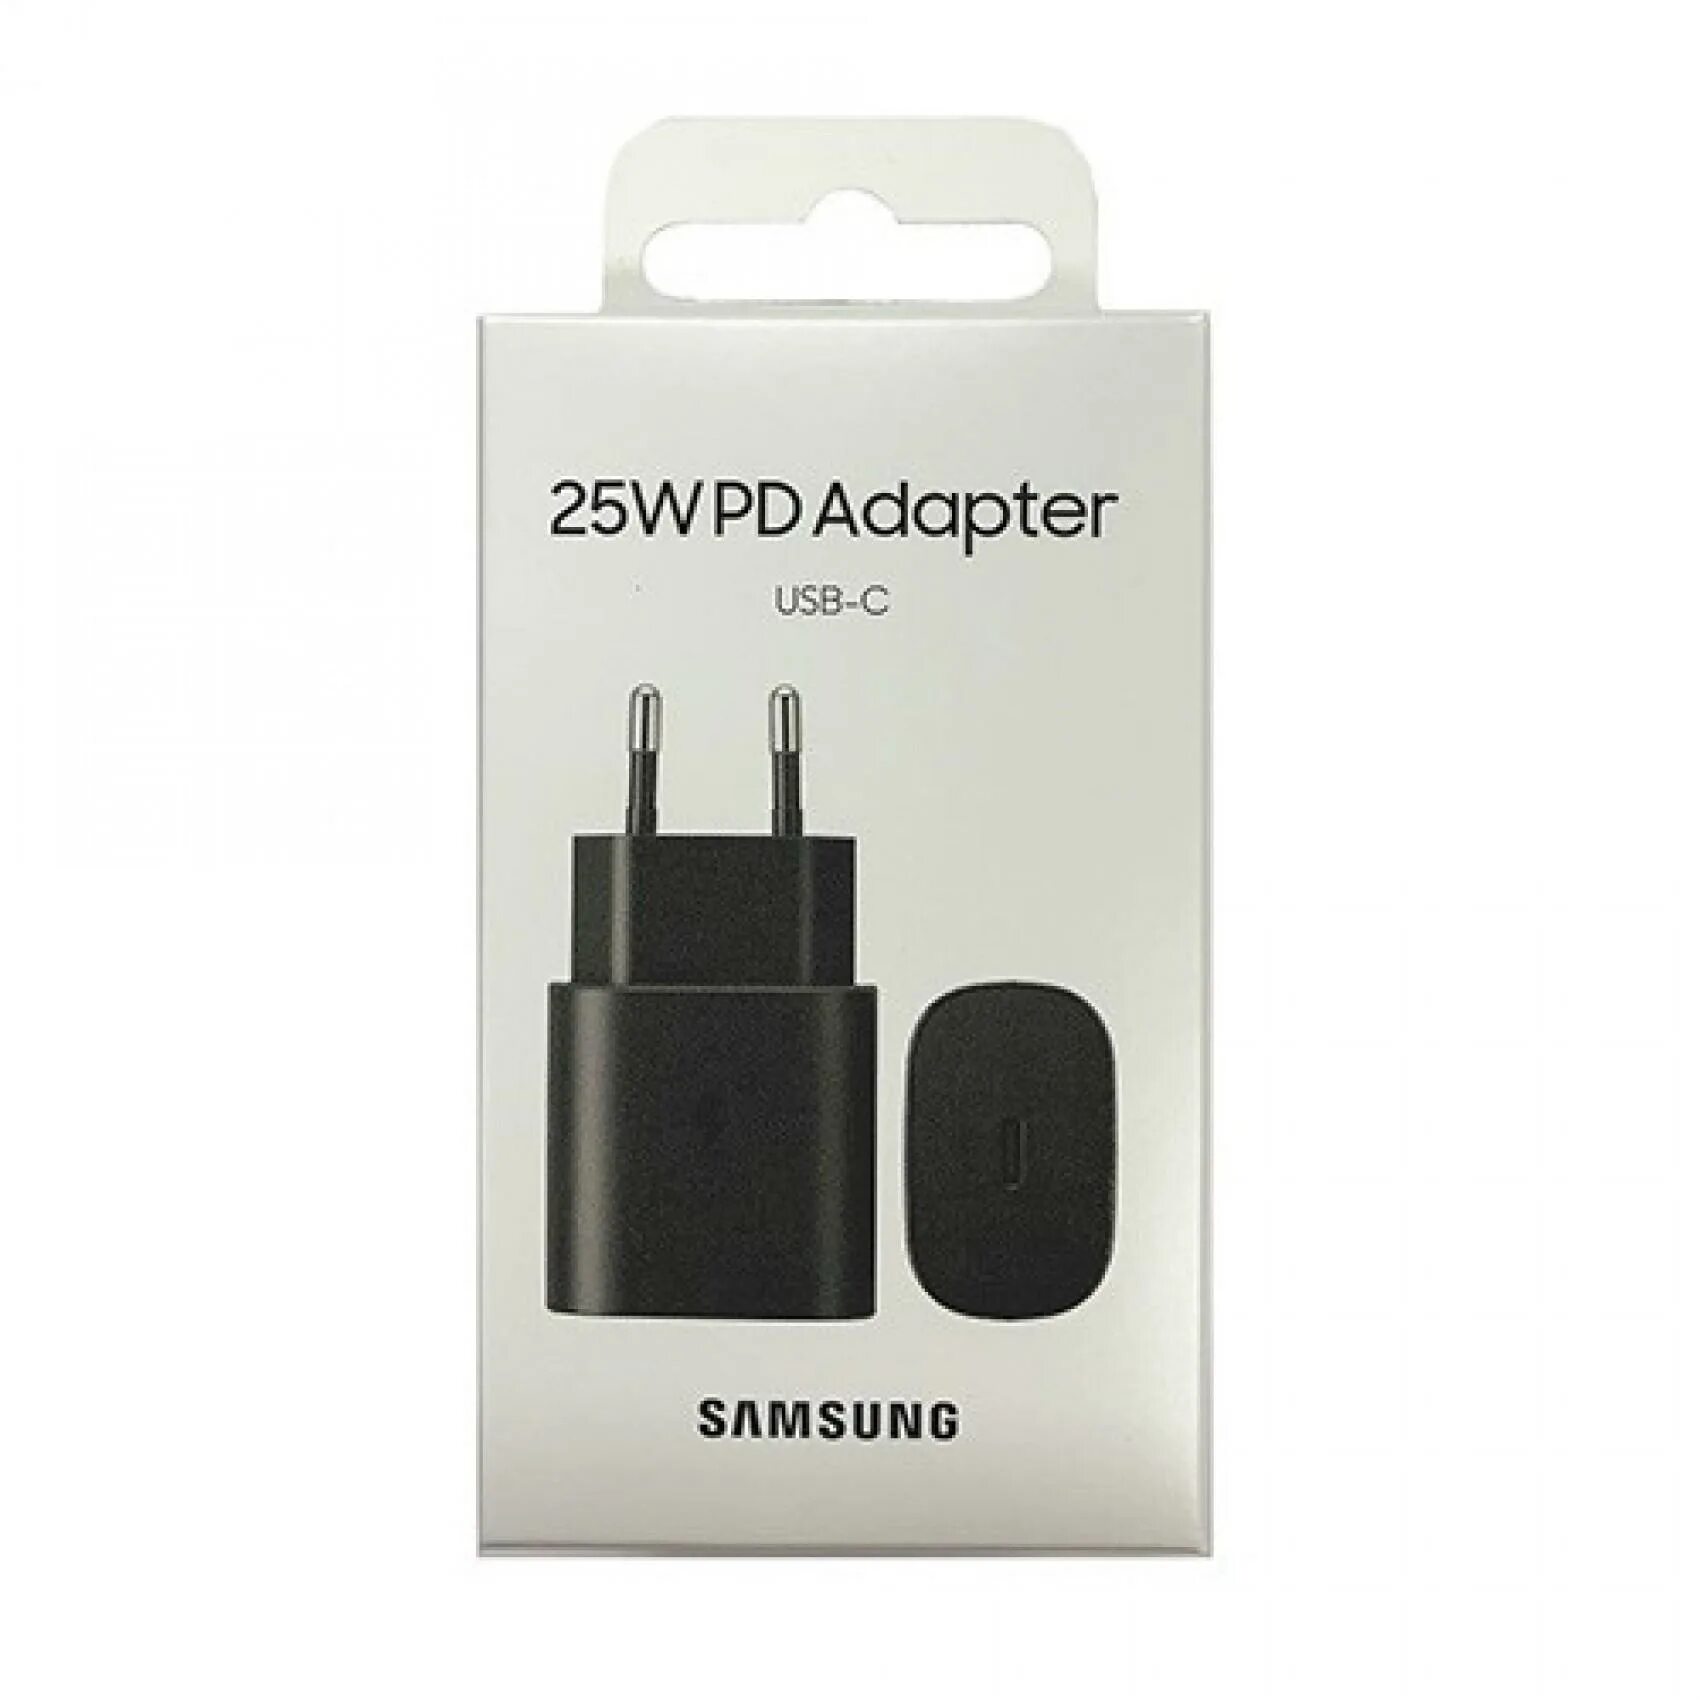 Samsung ta800 купить. СЗУ Samsung Adapter 1usb-c 25w. Samsung Travel Adapter Ep-ta800. Зарядка Samsung Adapter 25w. 25w PD Adapter Samsung.